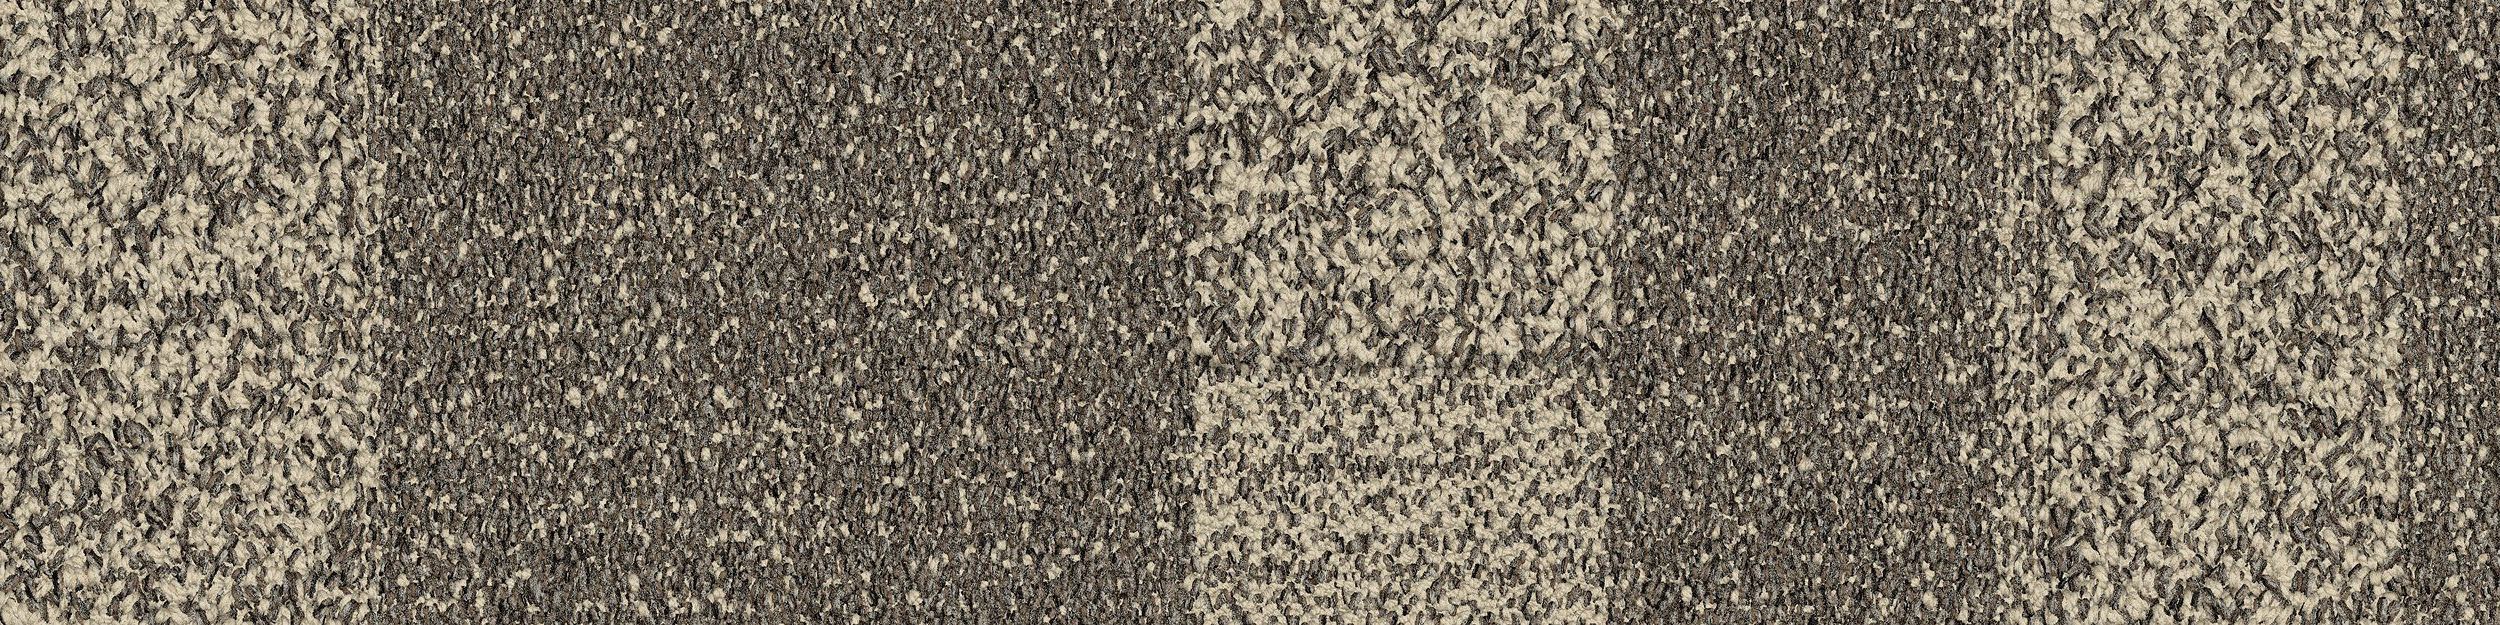 Future Woven Carpet Tile In Fieldstone numéro d’image 2